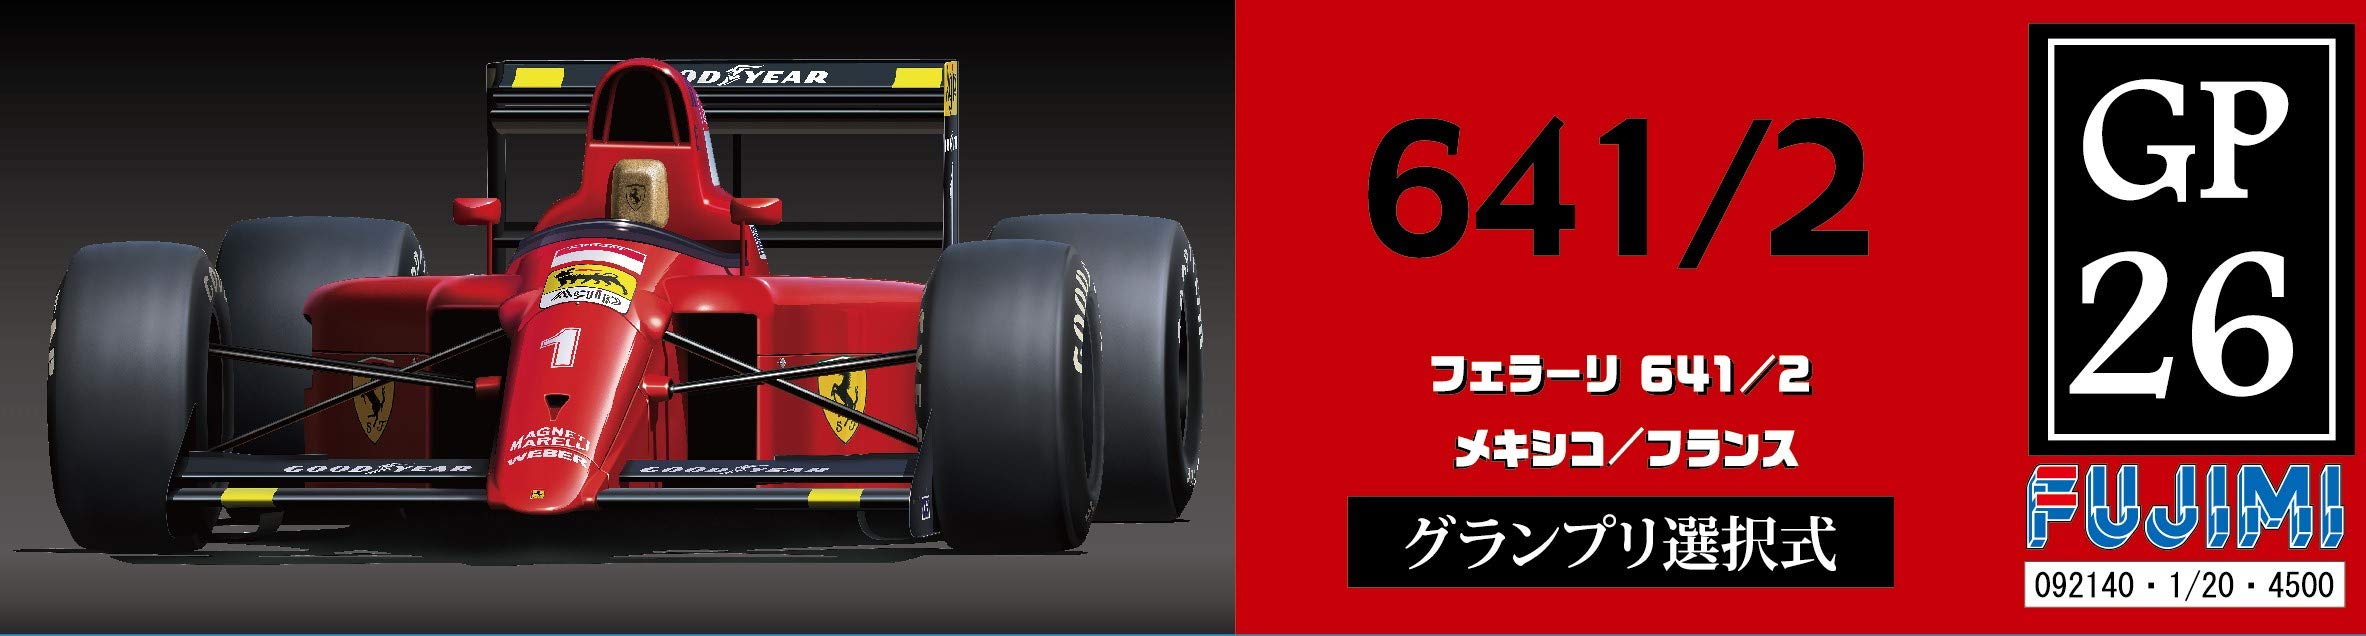 Fujimi Gp26 Ferrari 641/2 (Mexico Gp / France Gp) 1/20 Japanese Scale Racing Car Kit